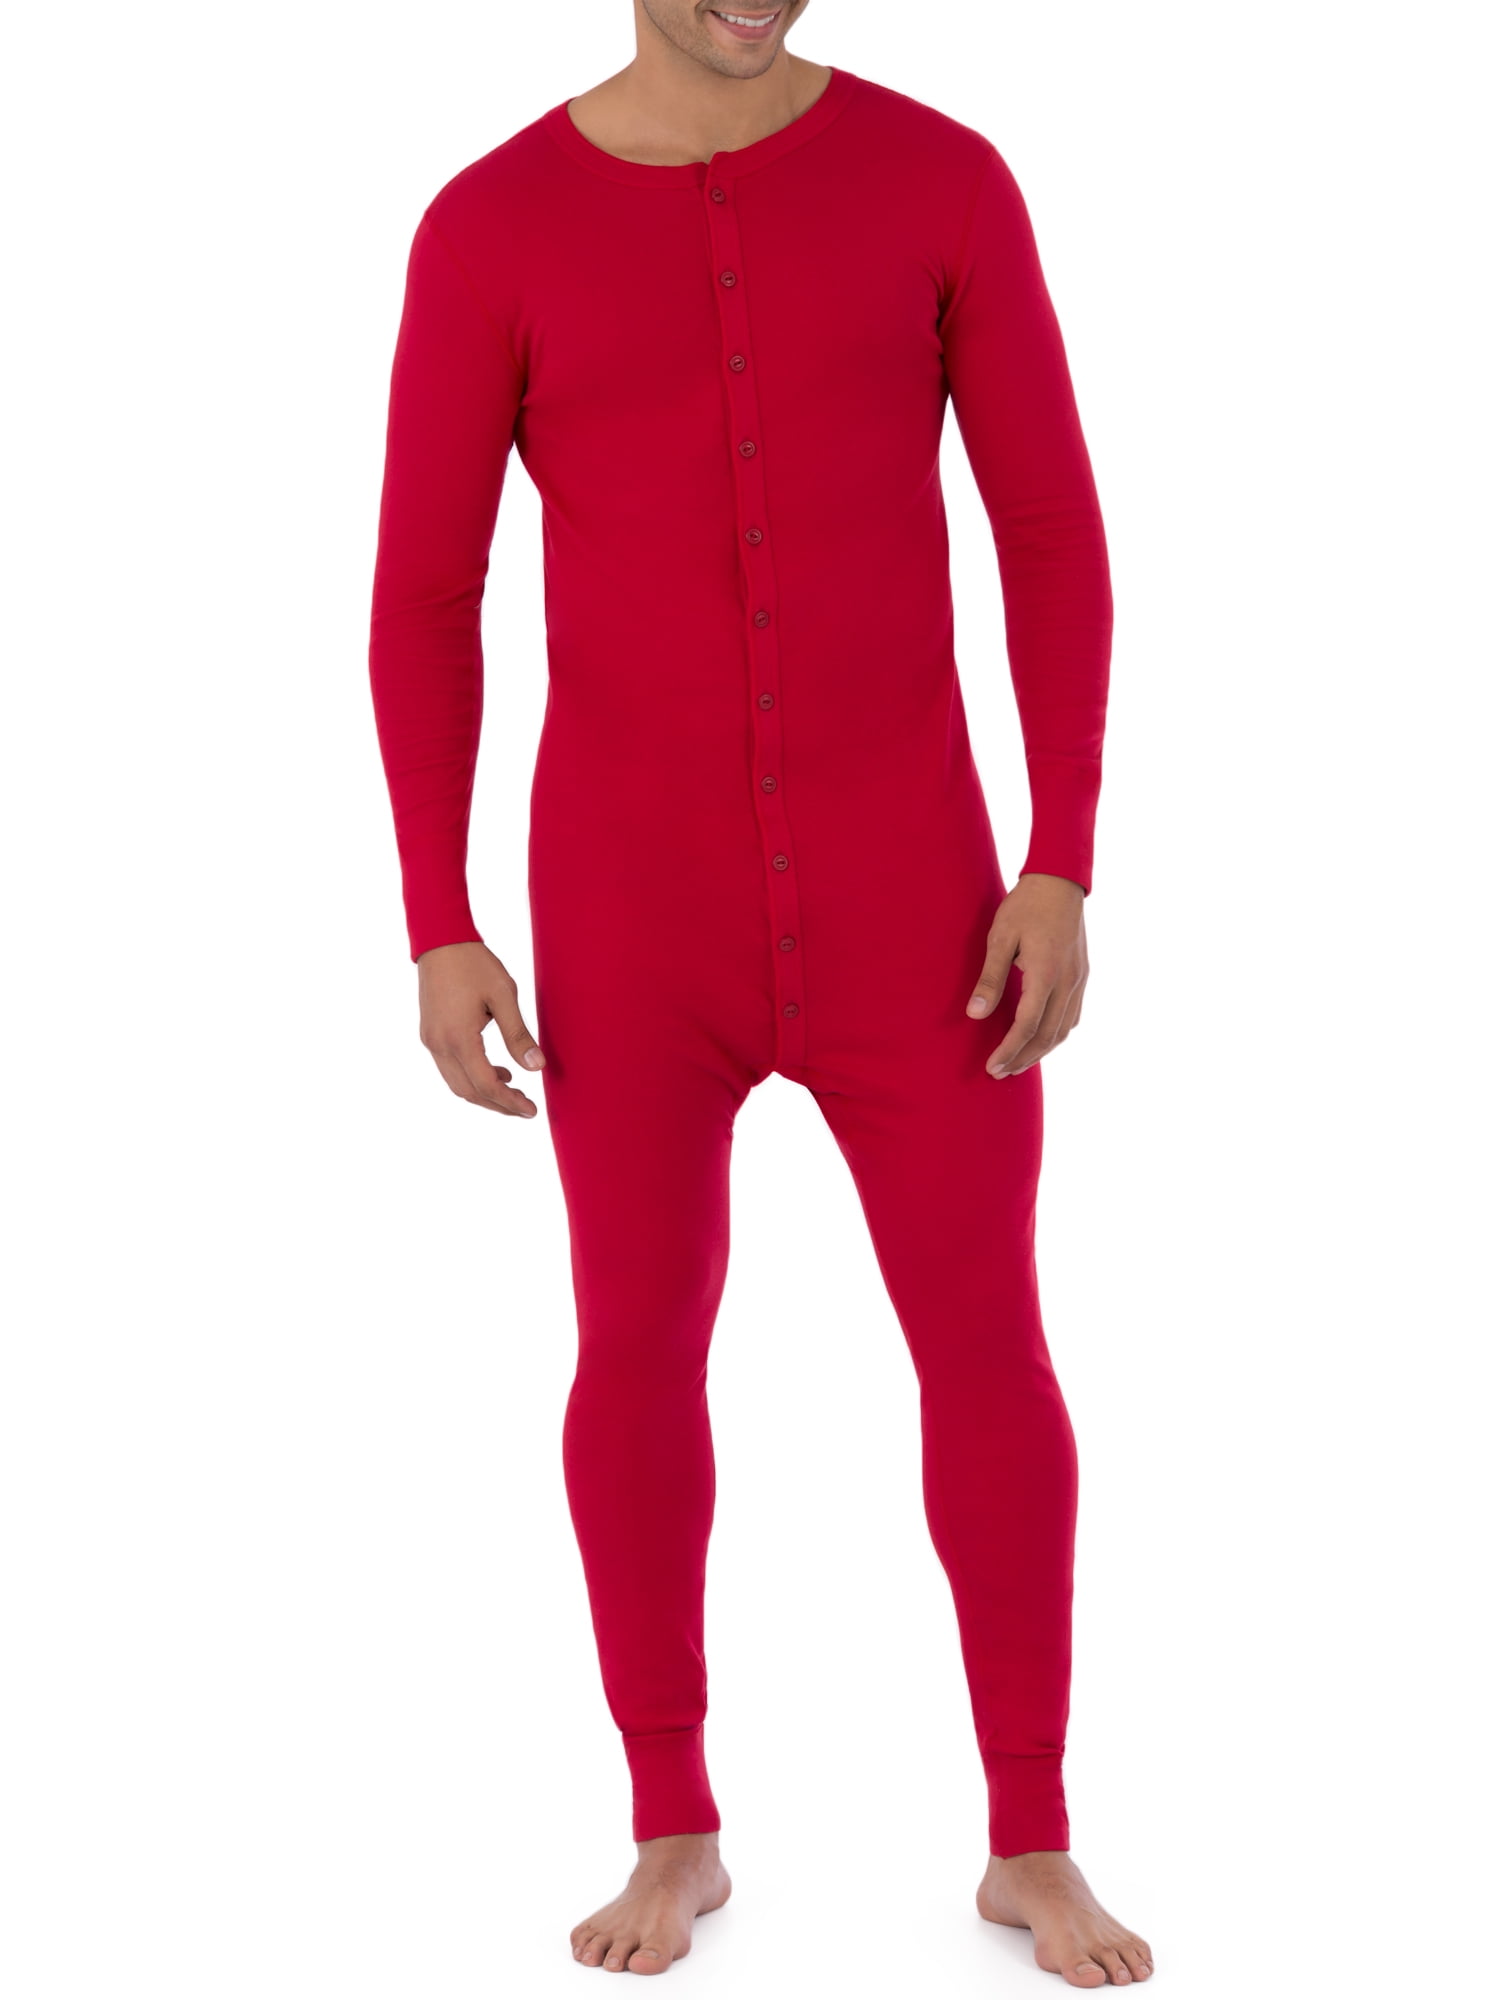 Fruit of the Loom Men's Premium Thermal Union Suit Pajama Bottom